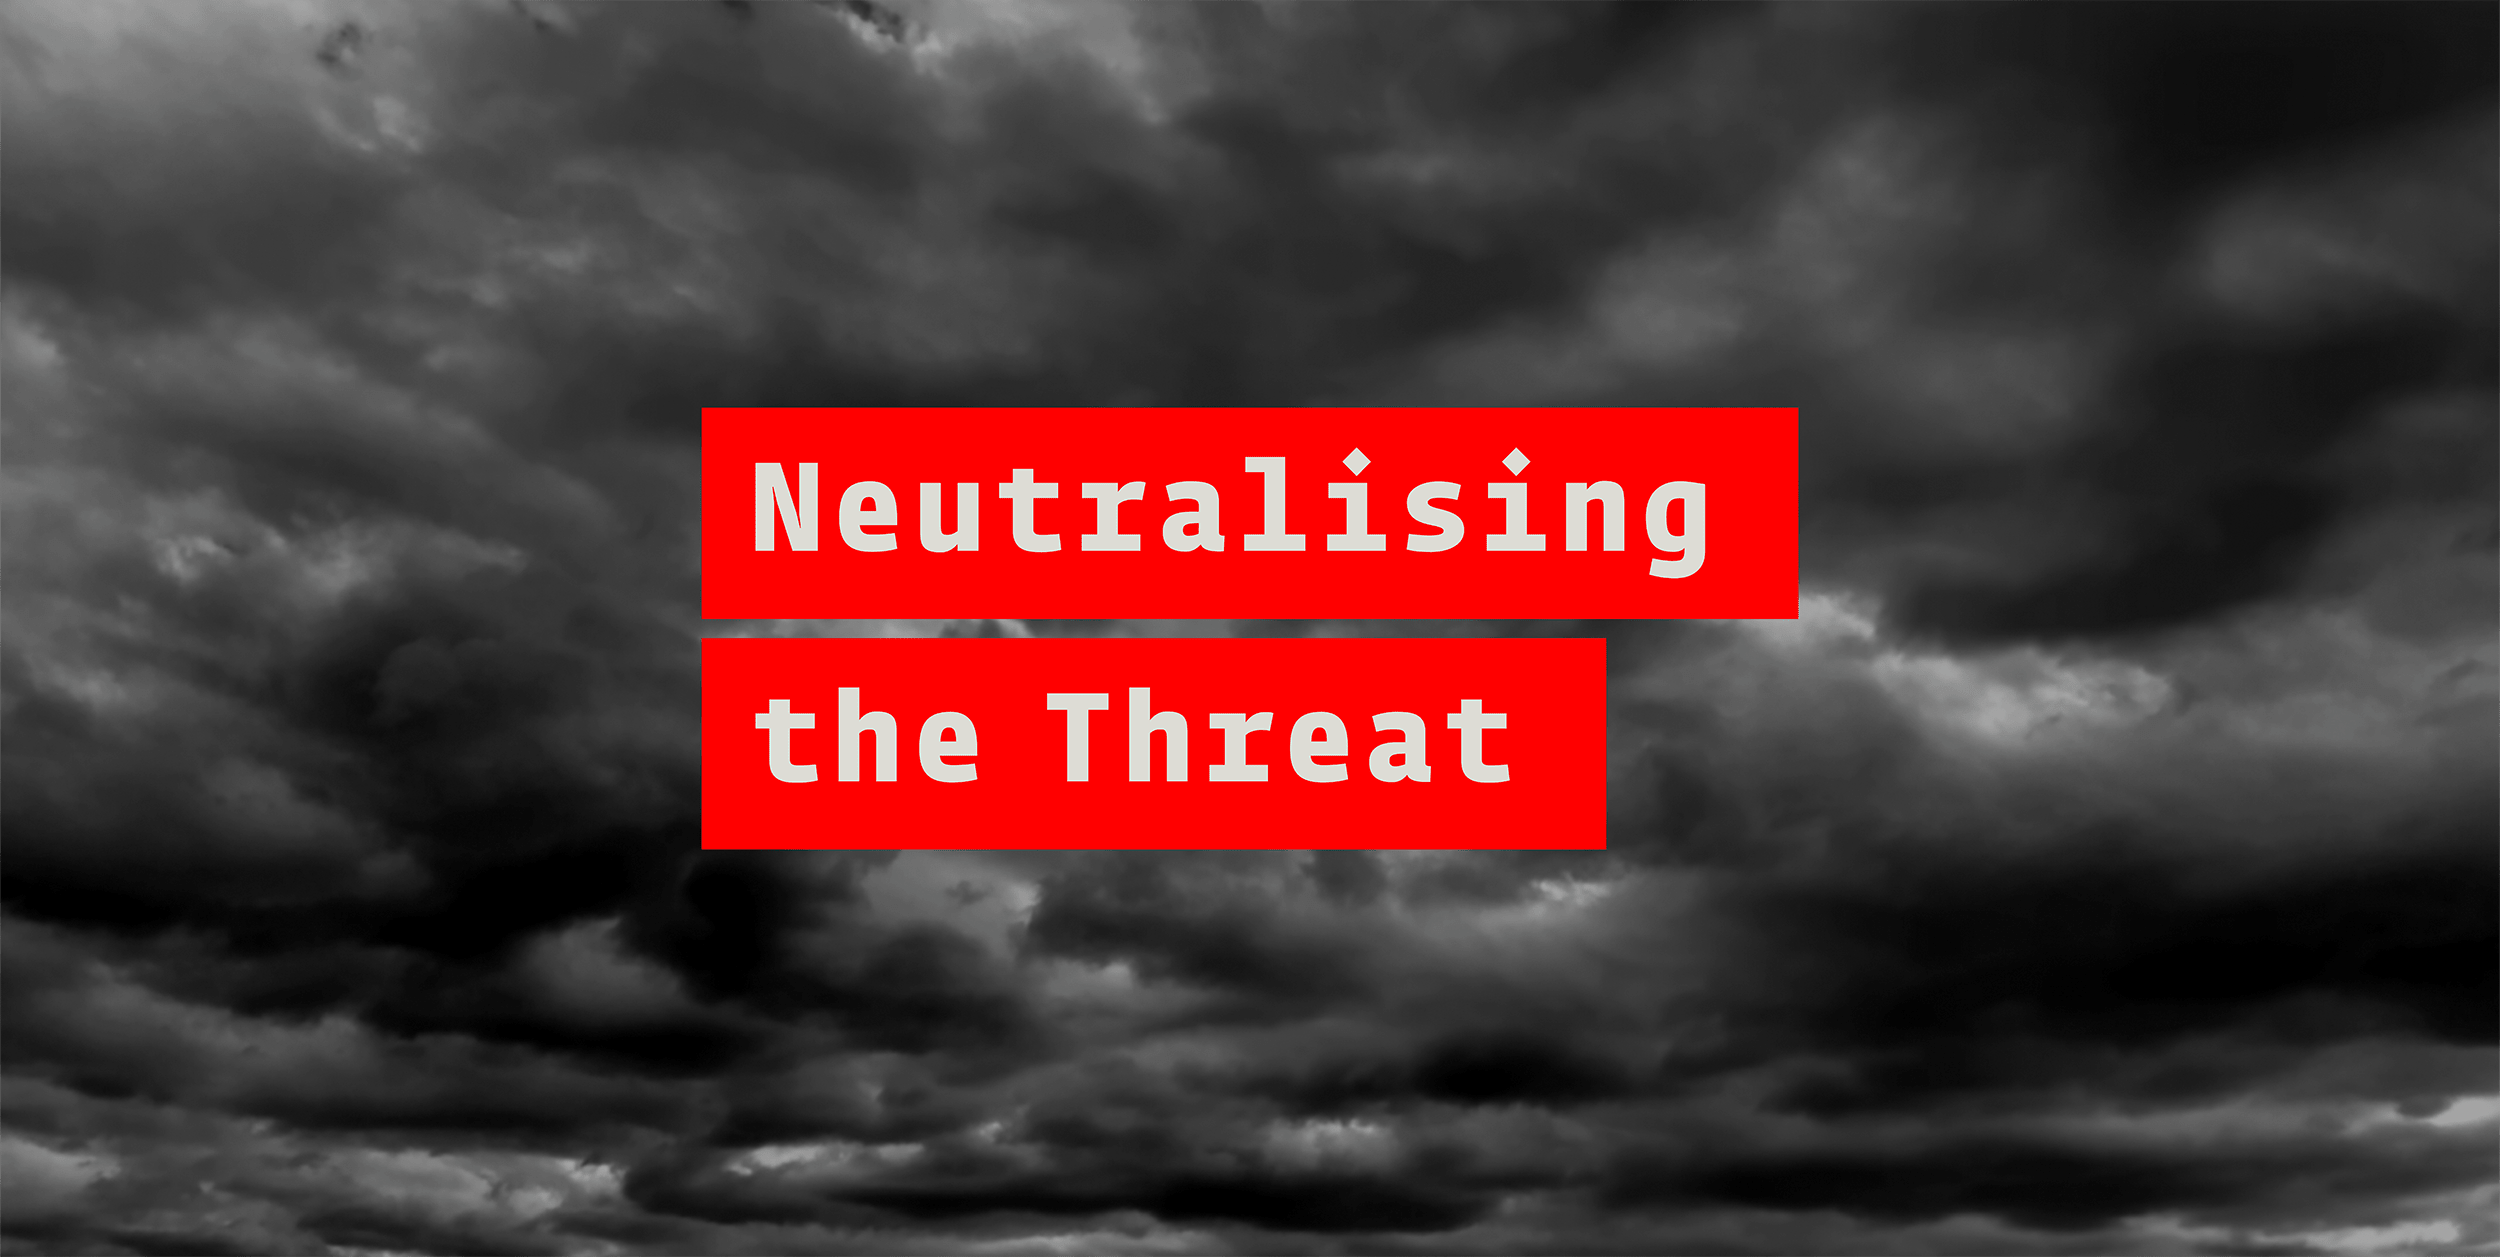 Neutralising the threat